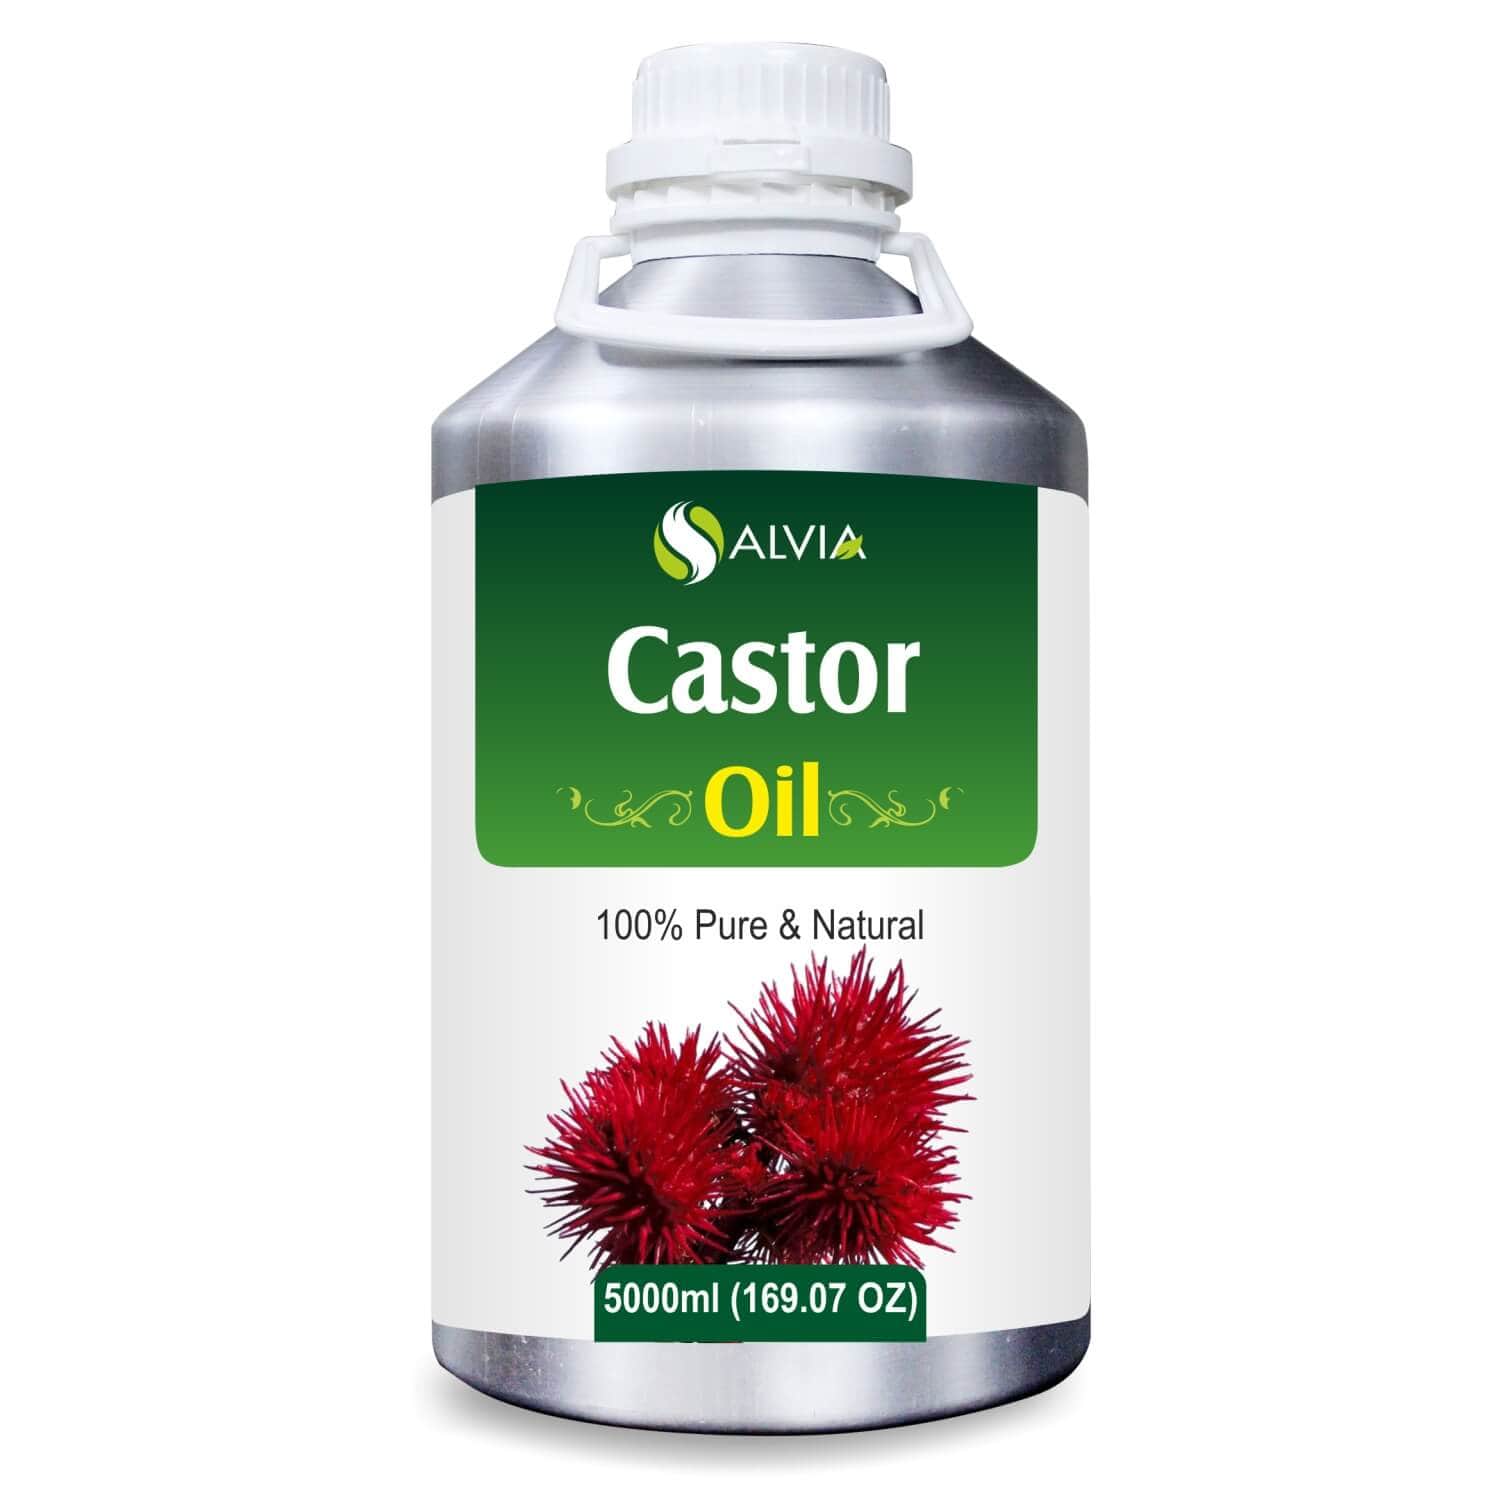  castor oil benefits for hair - Shoprythm